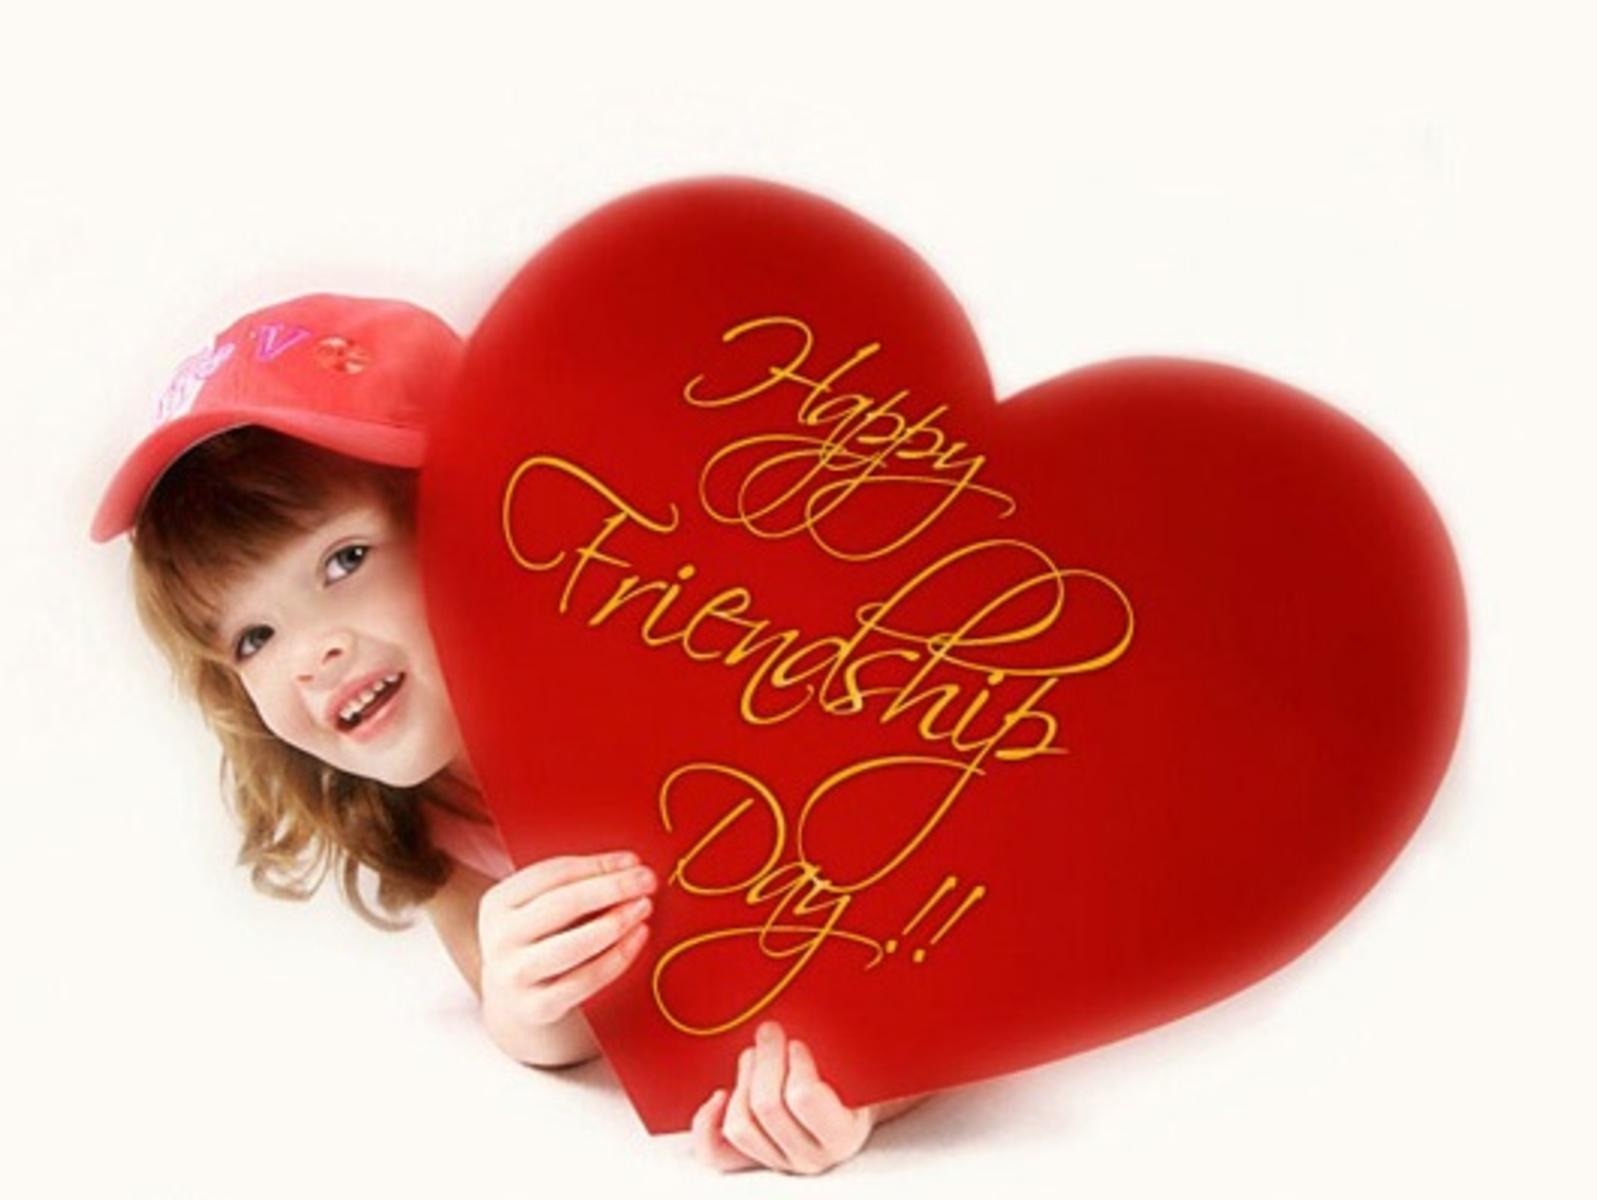 http://3.bp.blogspot.com/-wxnhLaOHWGo/UB2kJl6piPI/AAAAAAAAZXM/5TBS2n0_DDc/s1600/happy+friendship+day+(10).jpg